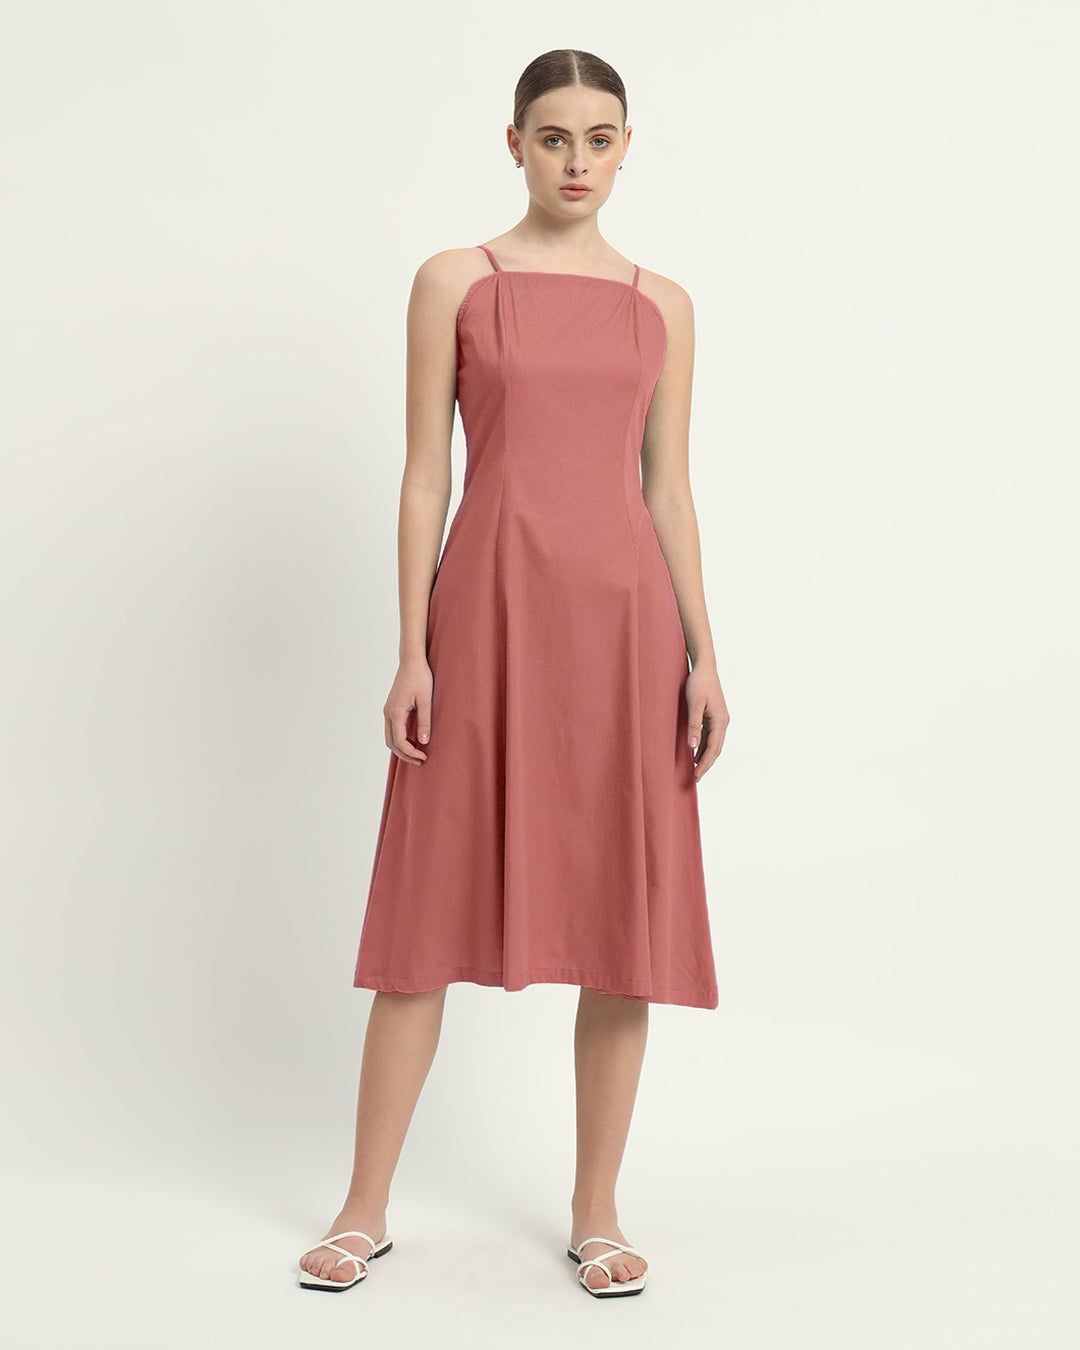 The Ivory Pink Valatie Cotton Dress